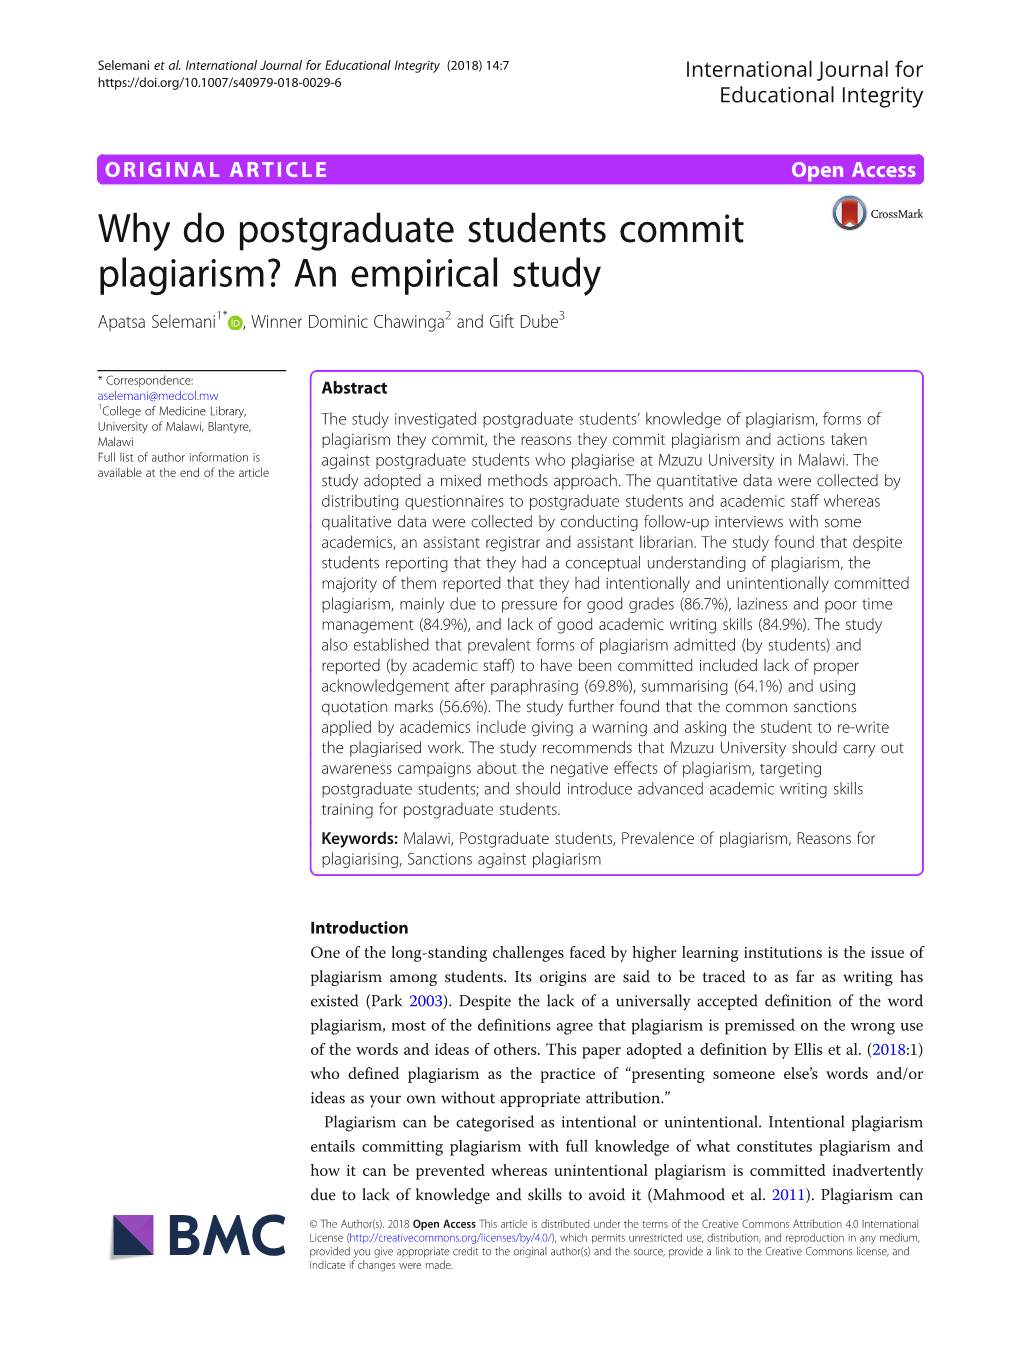 Why Do Postgraduate Students Commit Plagiarism? an Empirical Study Apatsa Selemani1* , Winner Dominic Chawinga2 and Gift Dube3